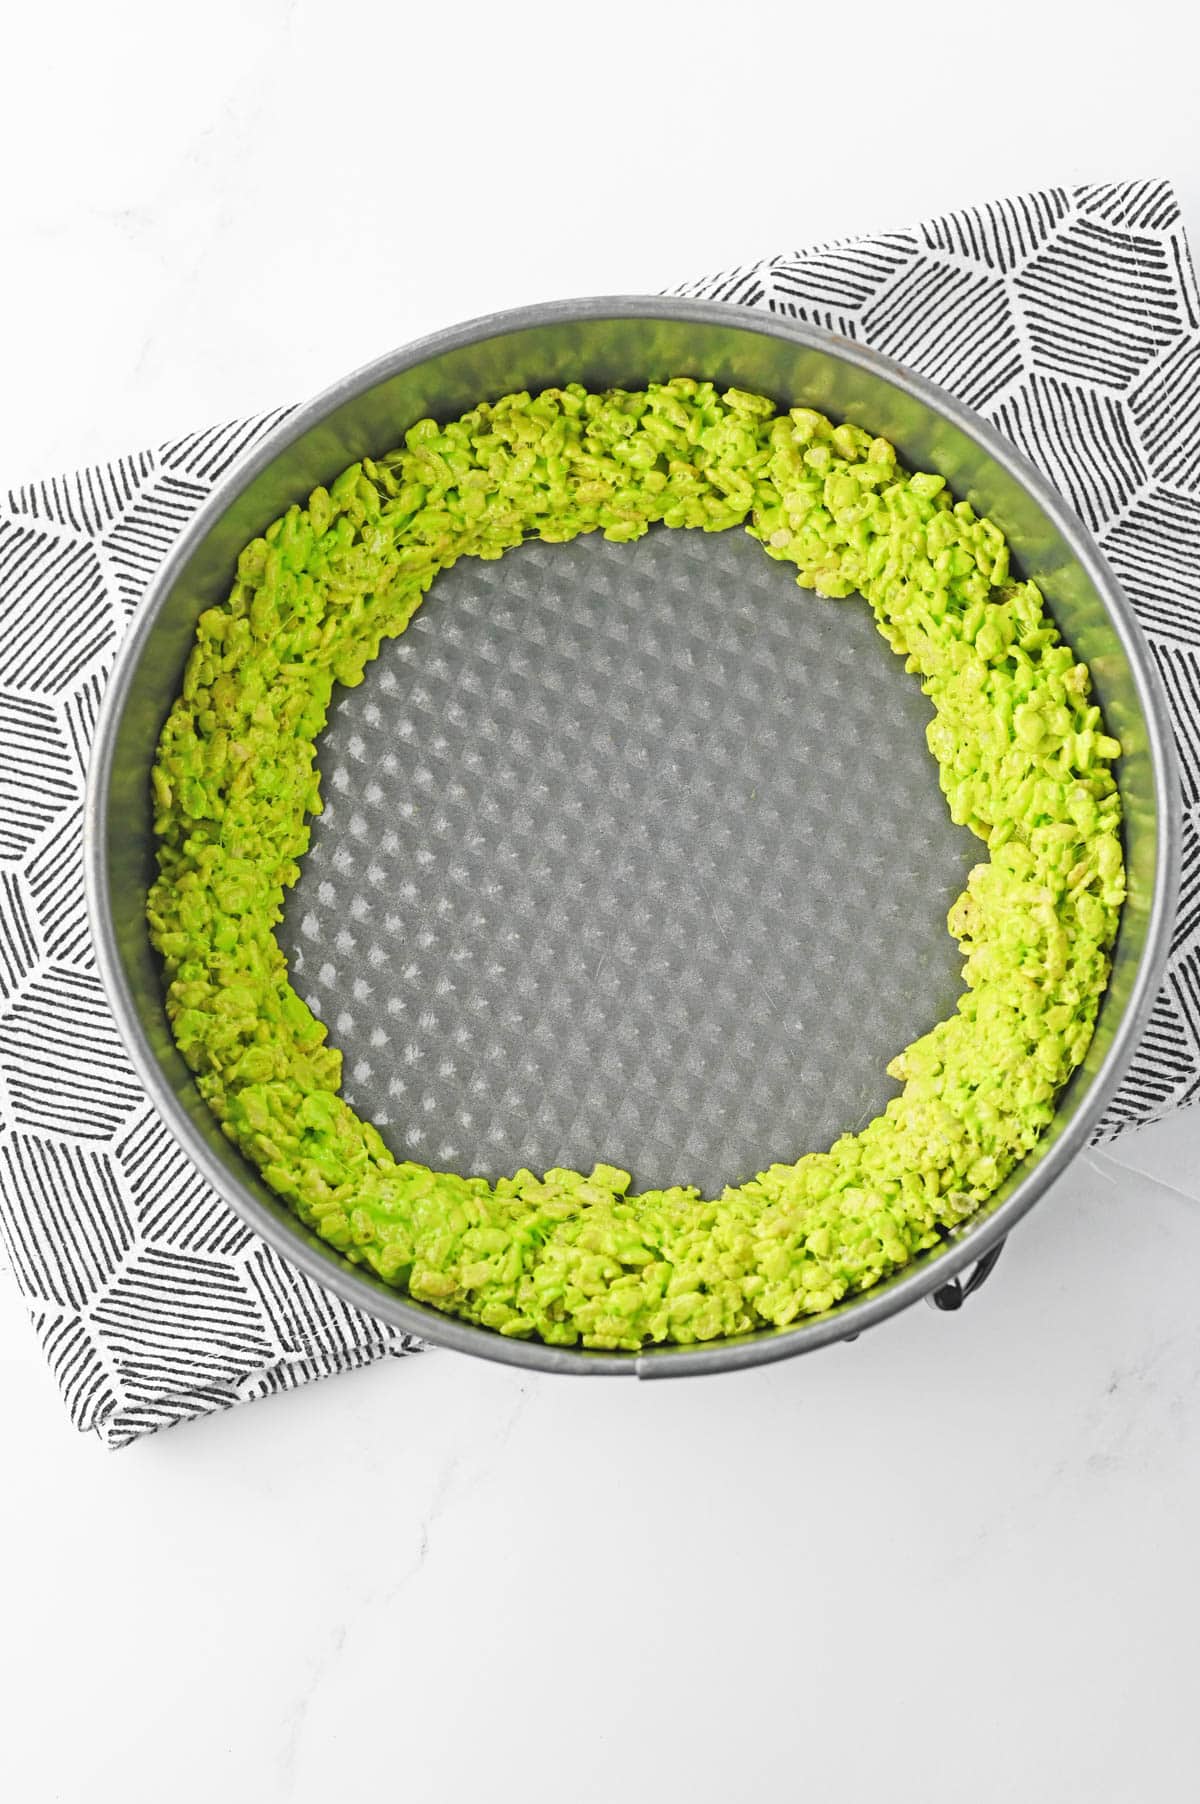 Ring of green rice krispies in pan